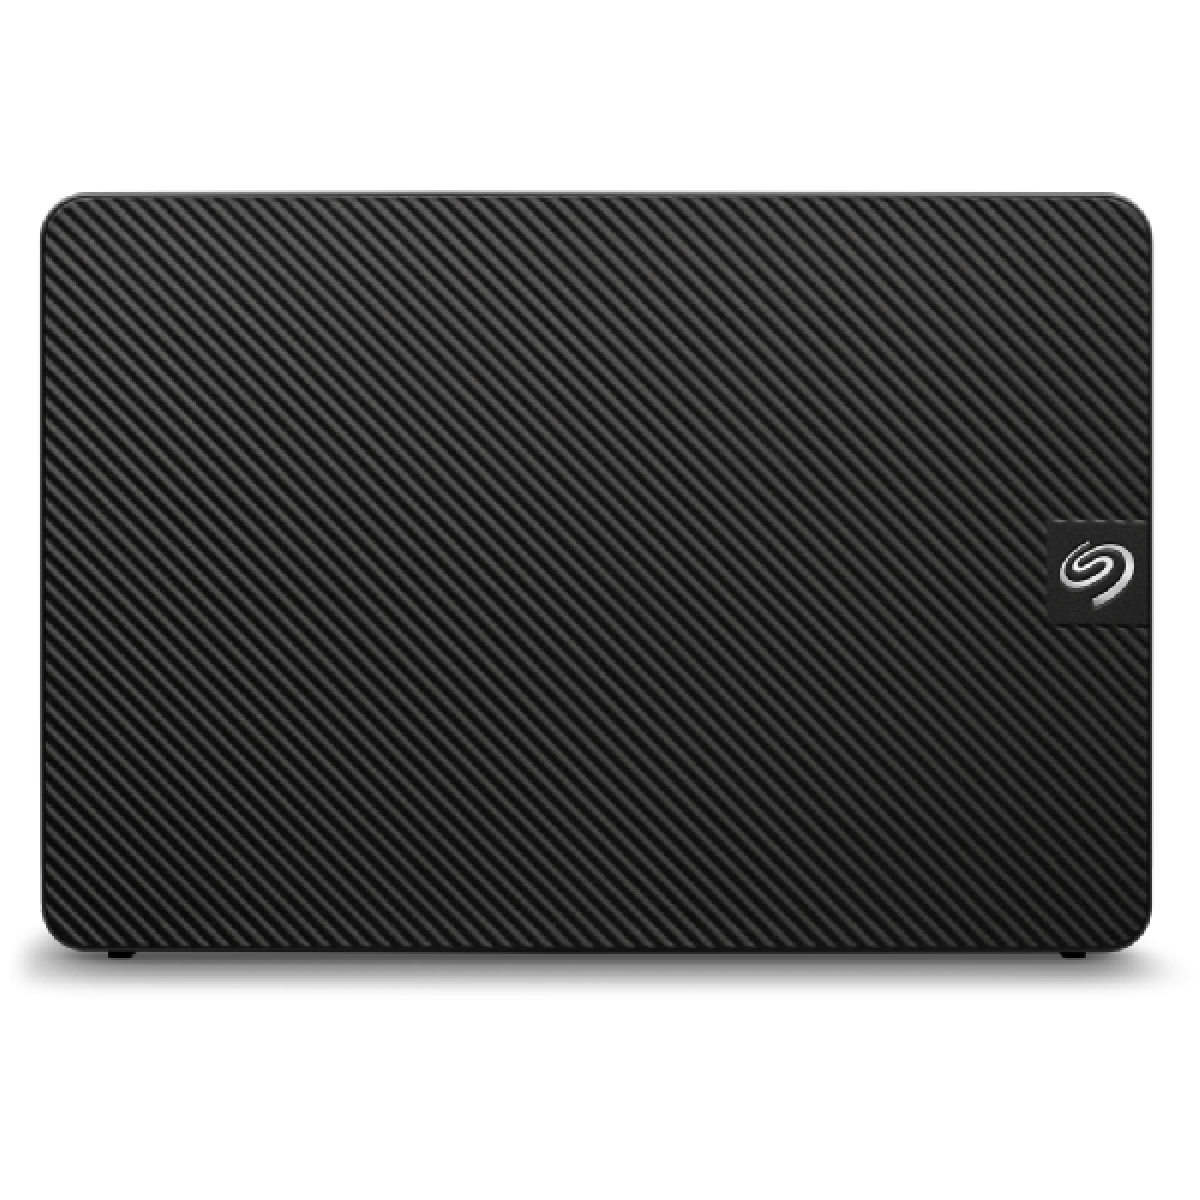 Seagate zunanji disk 14TB 8,89cm (3,5) Expansion Desktop USB 3.0